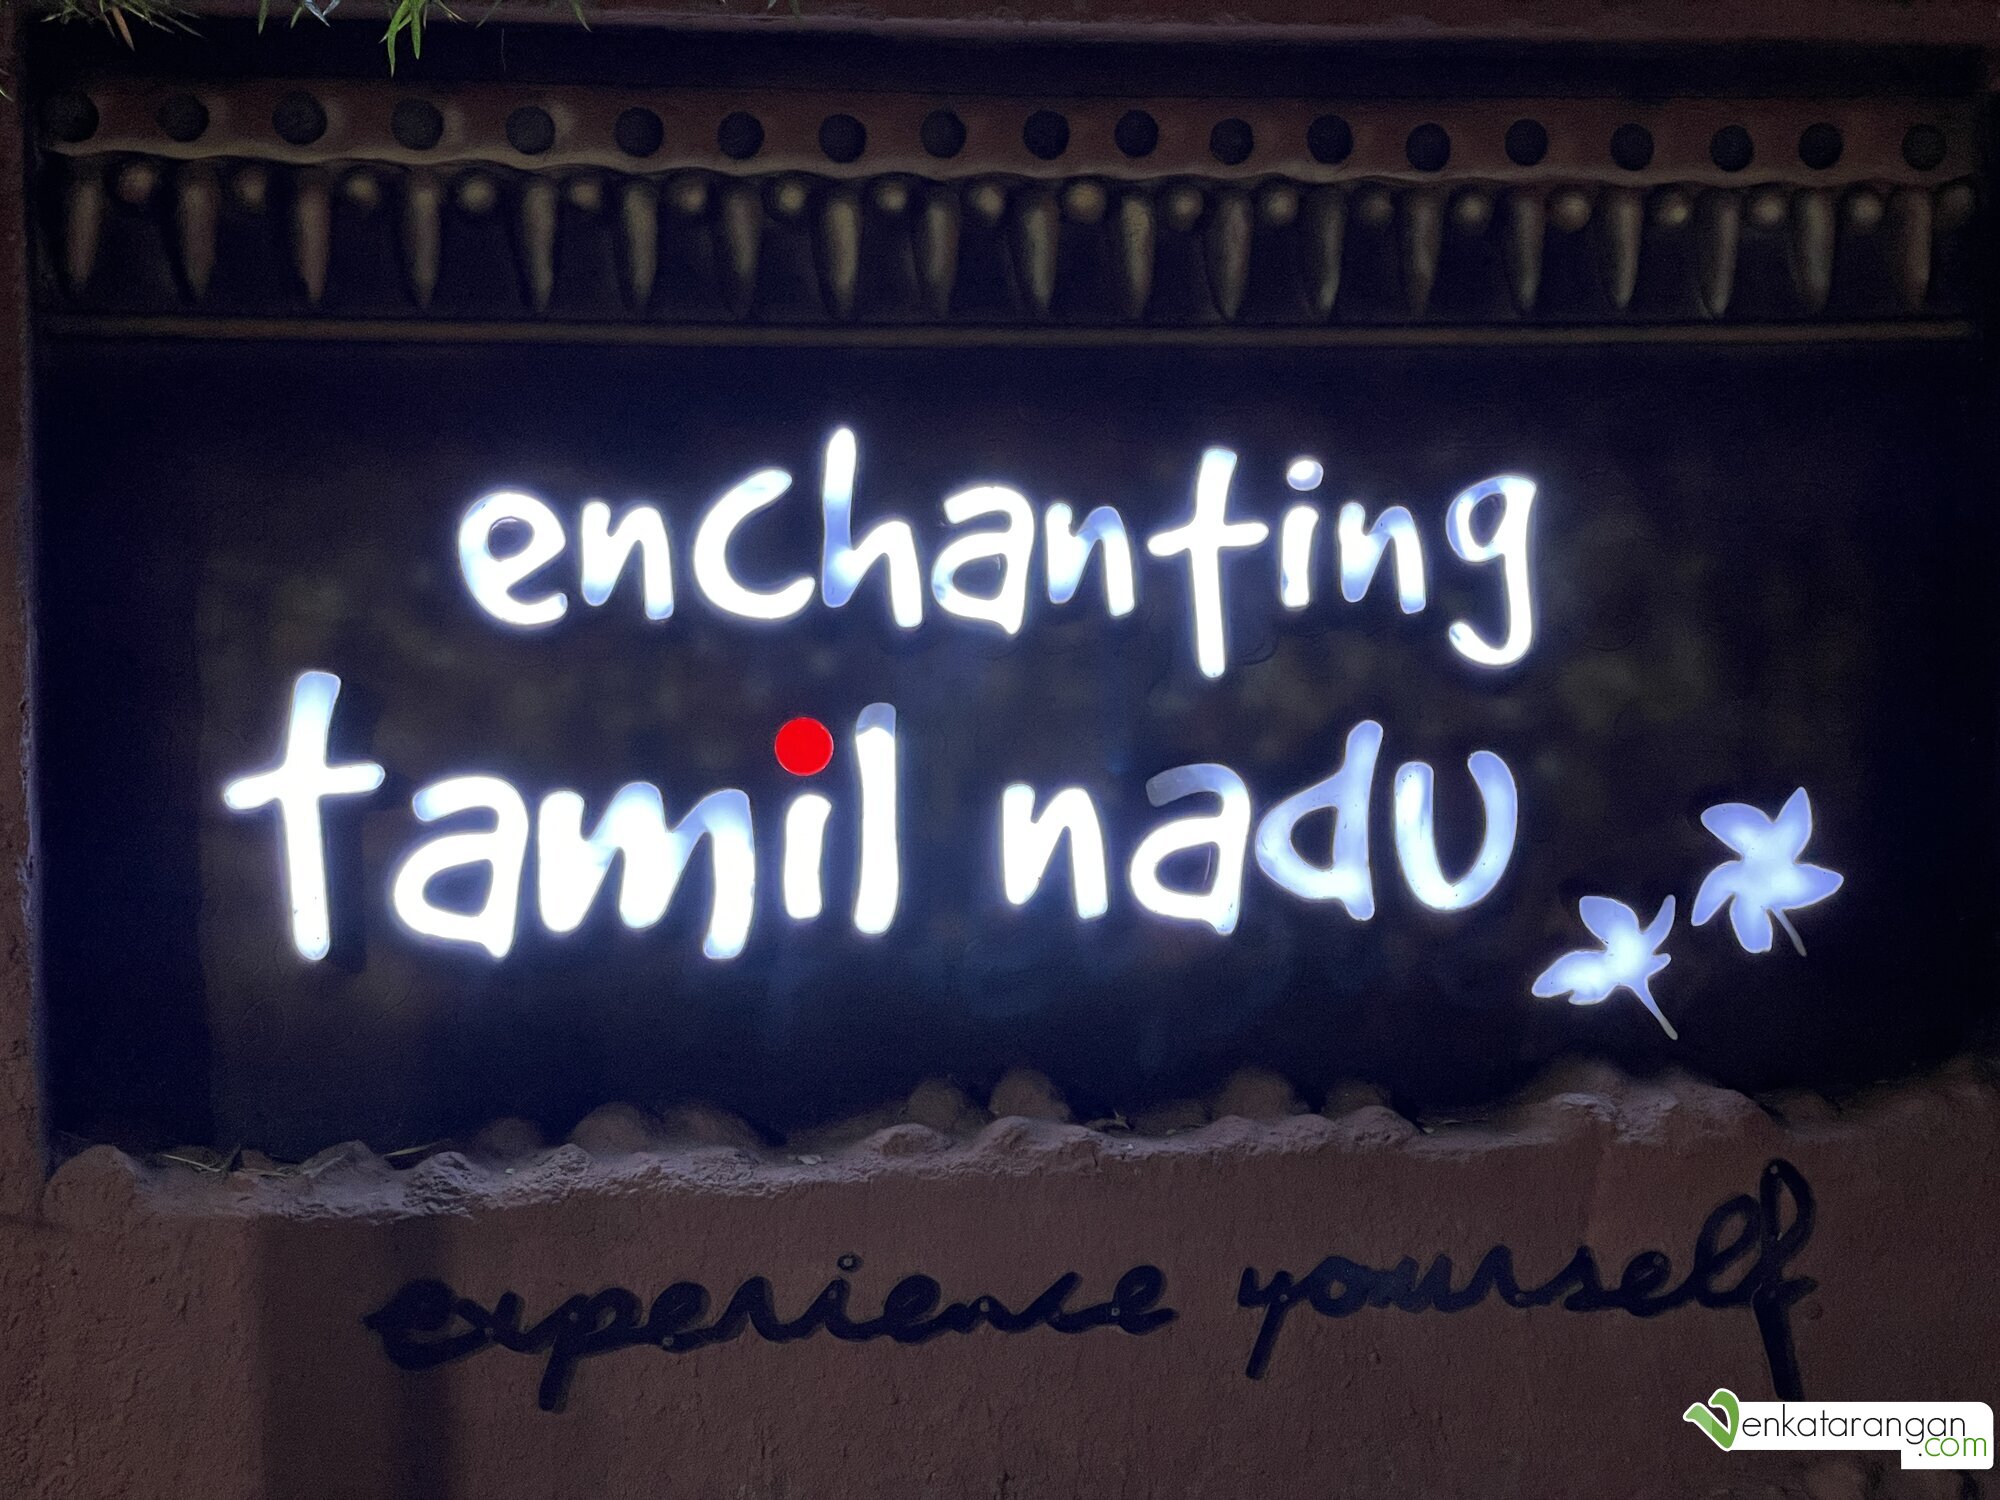 enchanting tamil nadu - experience yourself